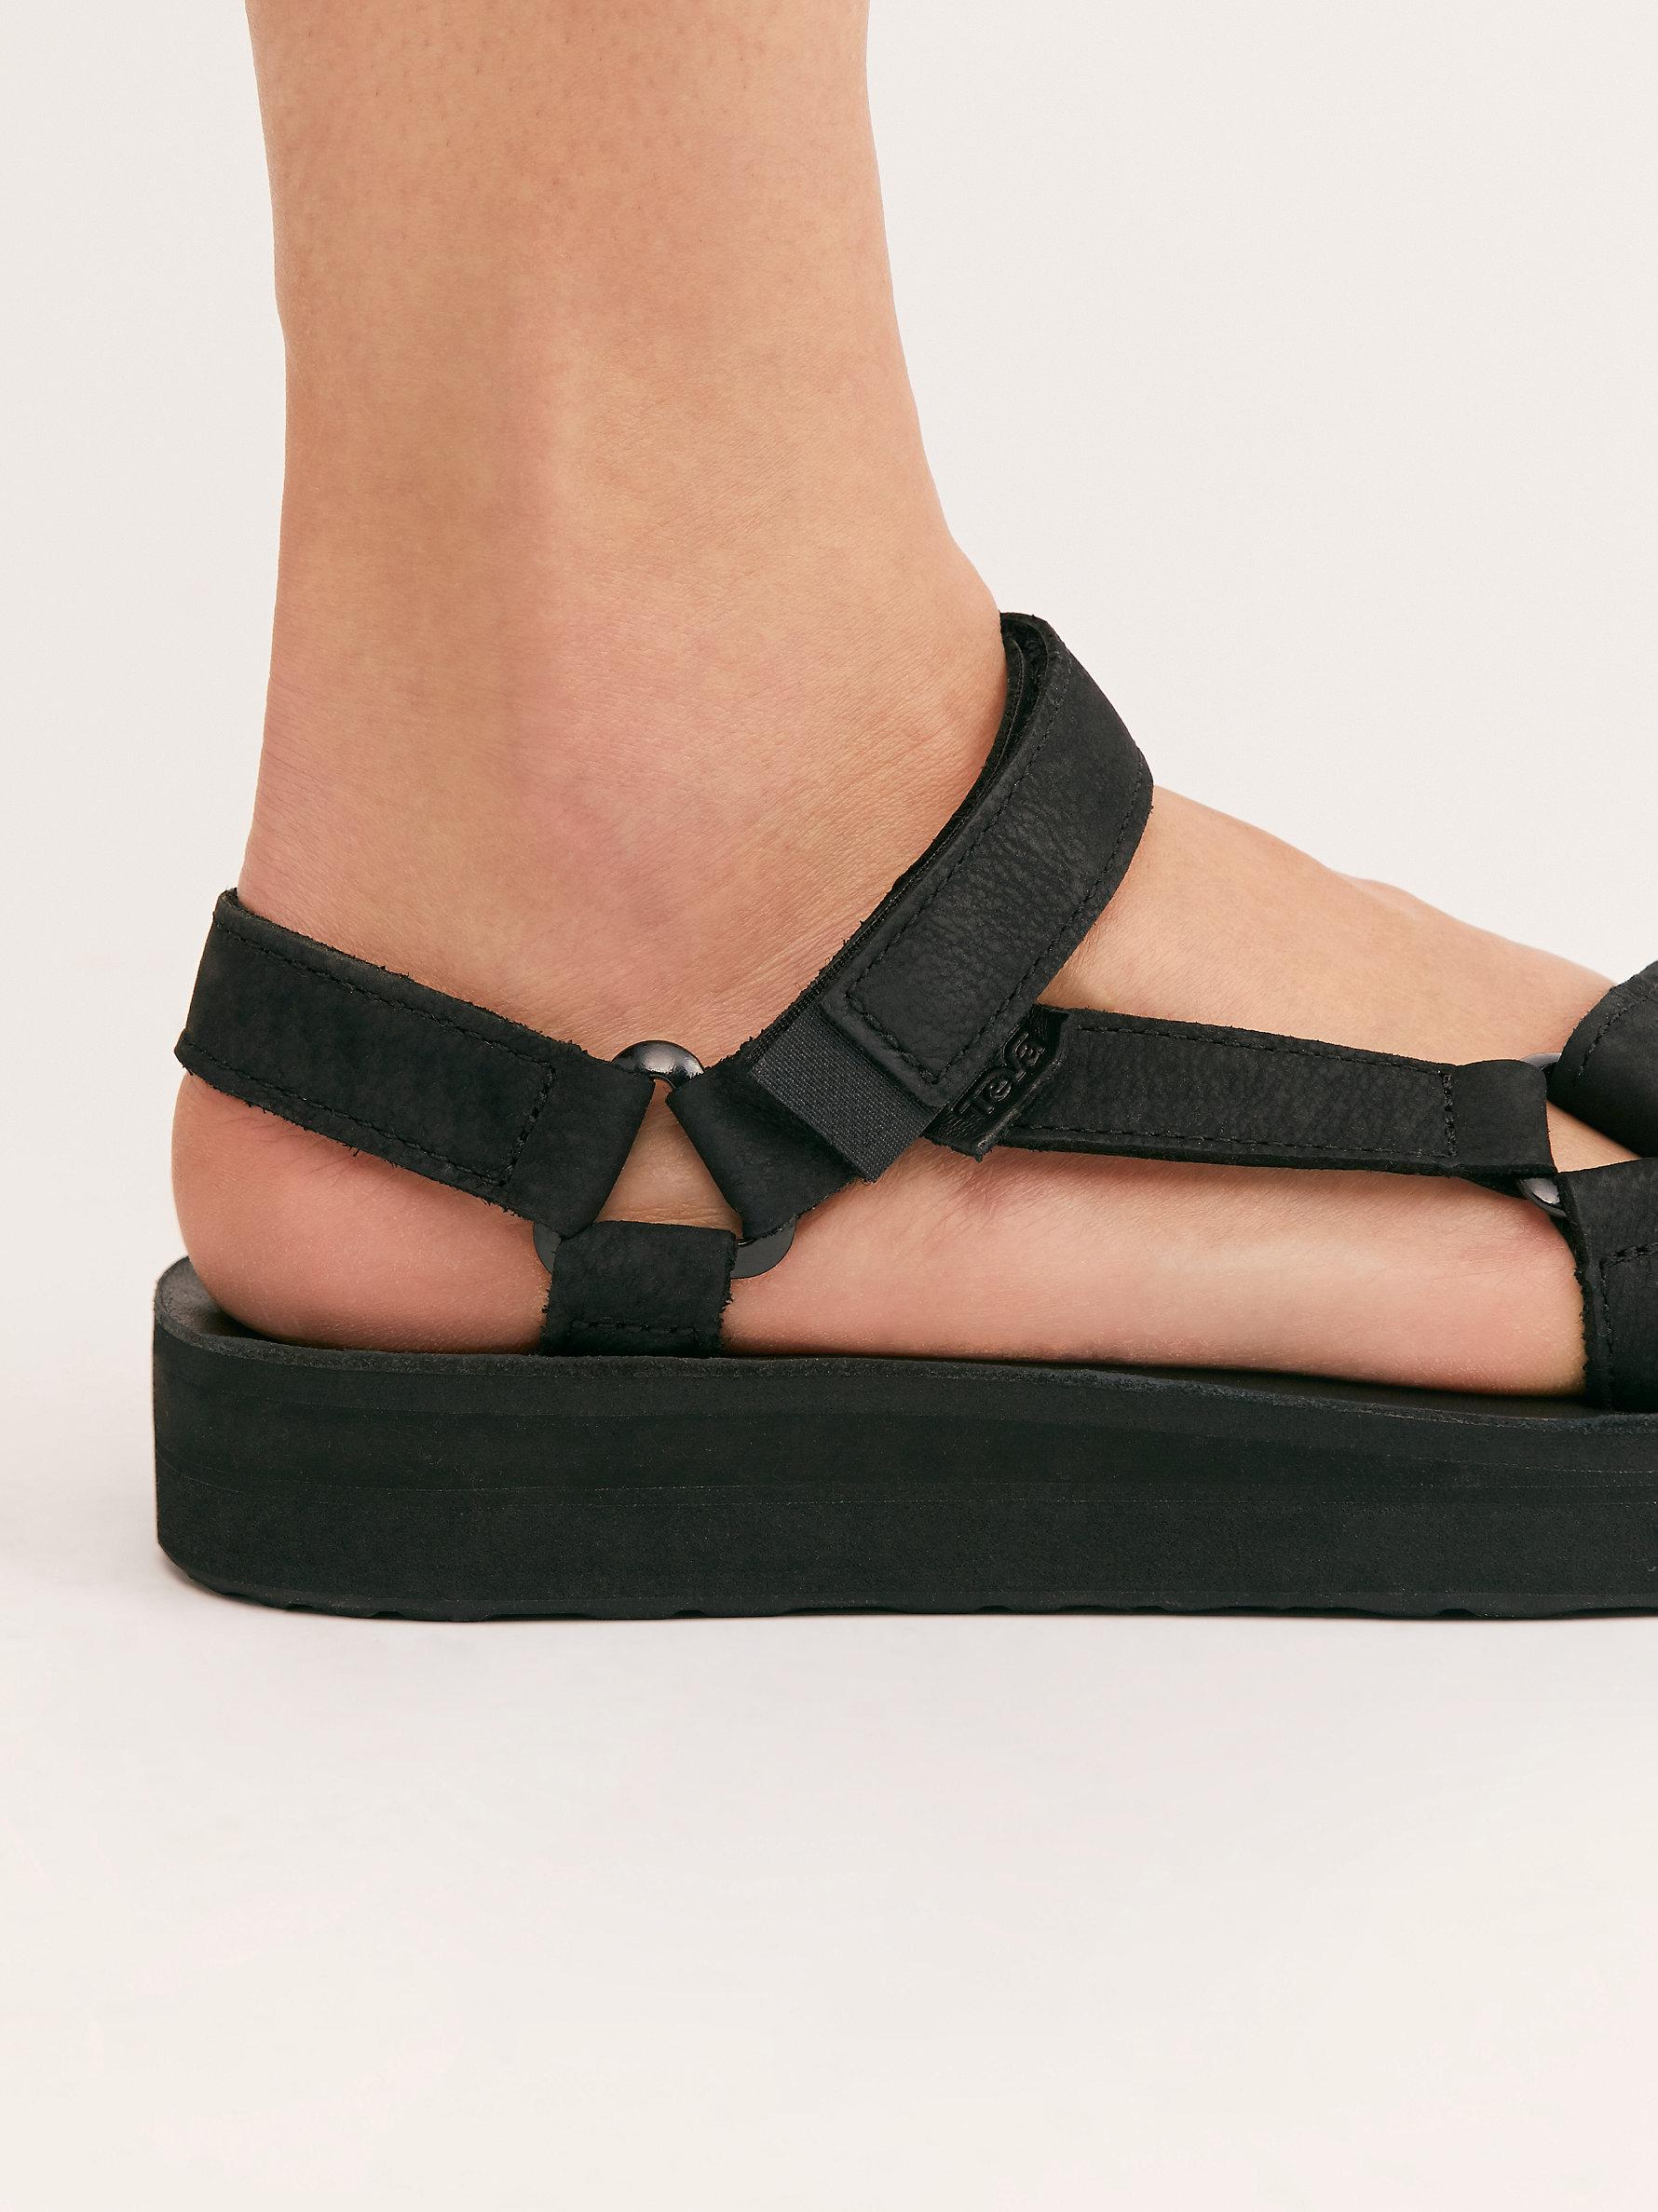 Free People Teva Midform Universal Leather Sandals in Black | Lyst